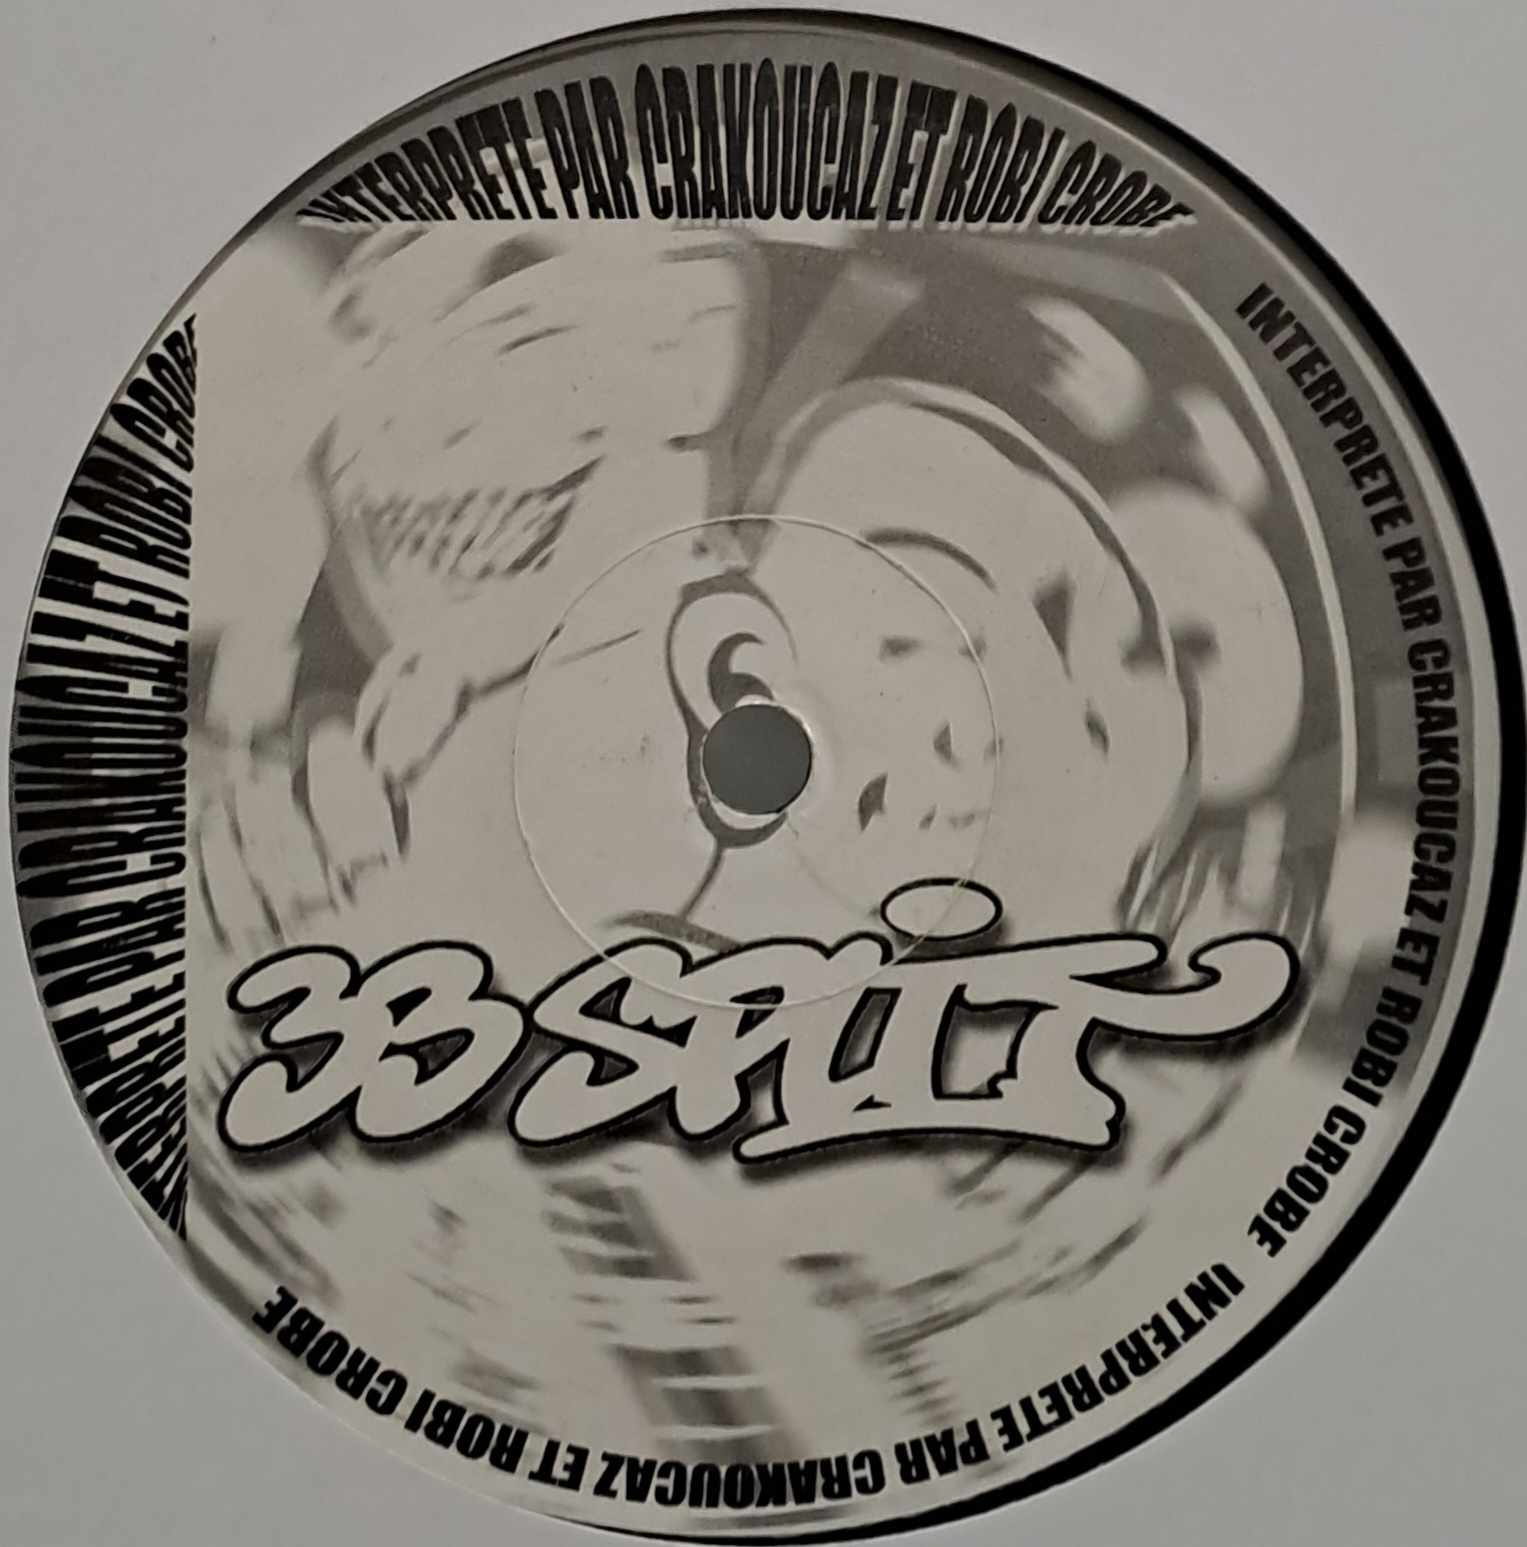 33 Split 01 - vinyle freetekno